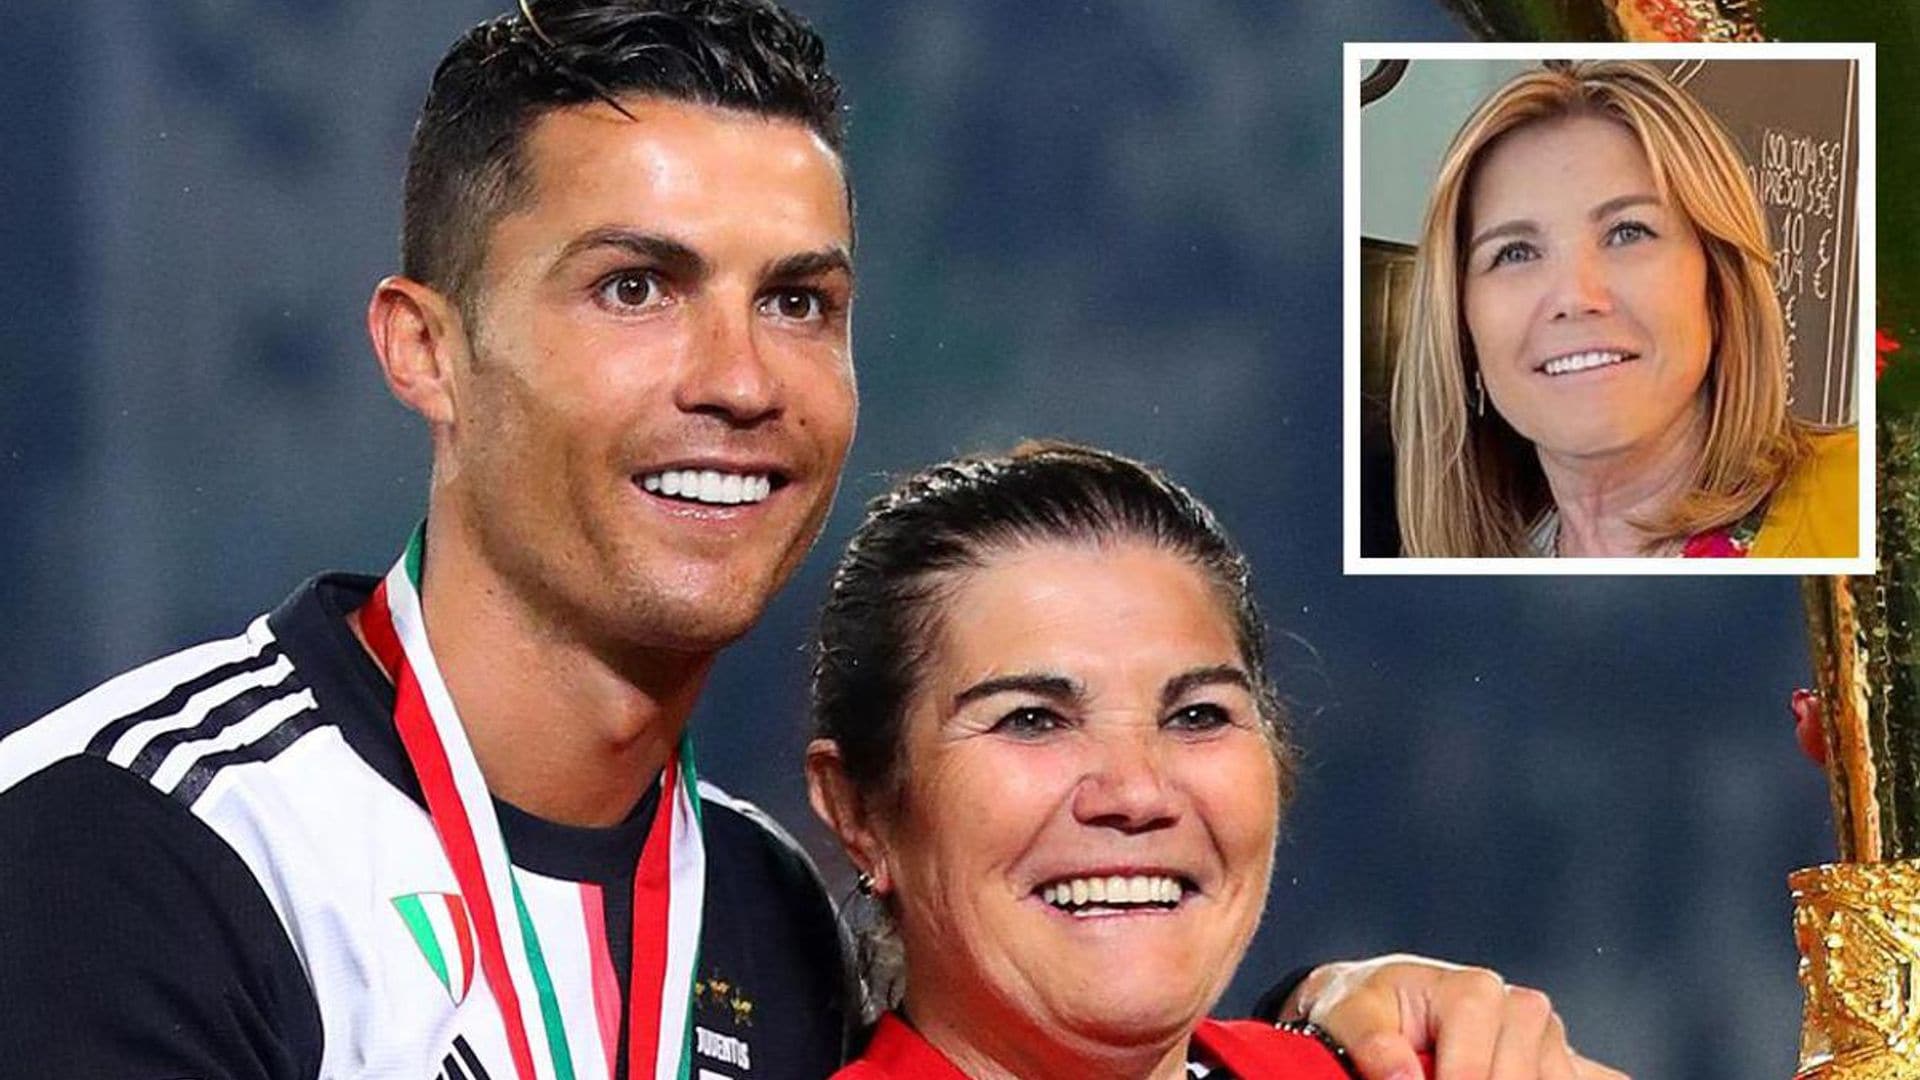 Cristiano Ronaldo’s mom Dolores Aveiro’s new look surprises fans